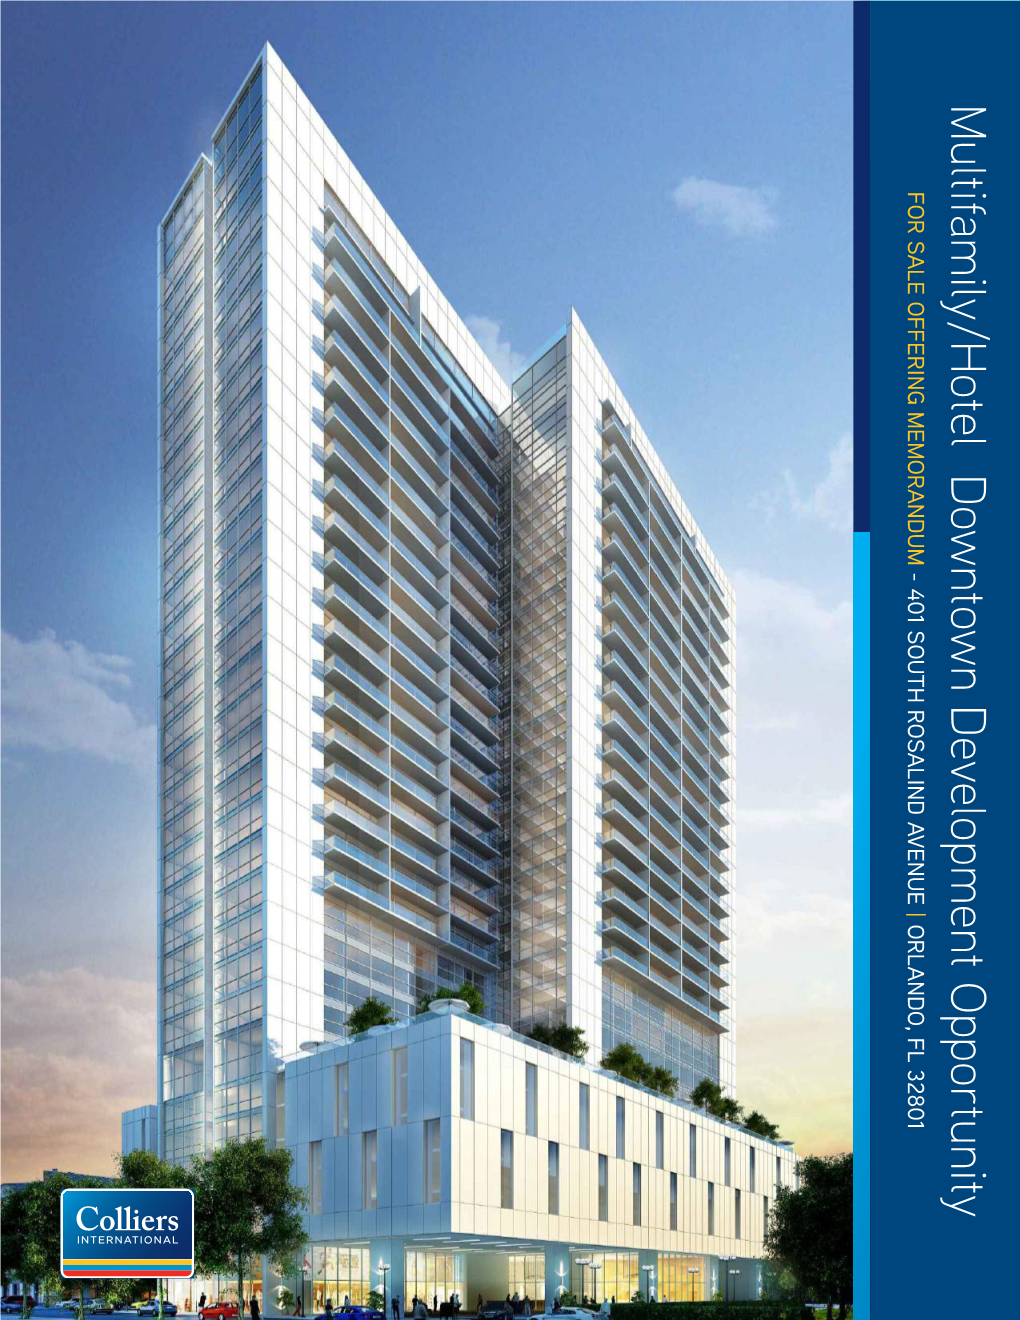 Multifamily/Hotel Downtown Development Opportunityfor S